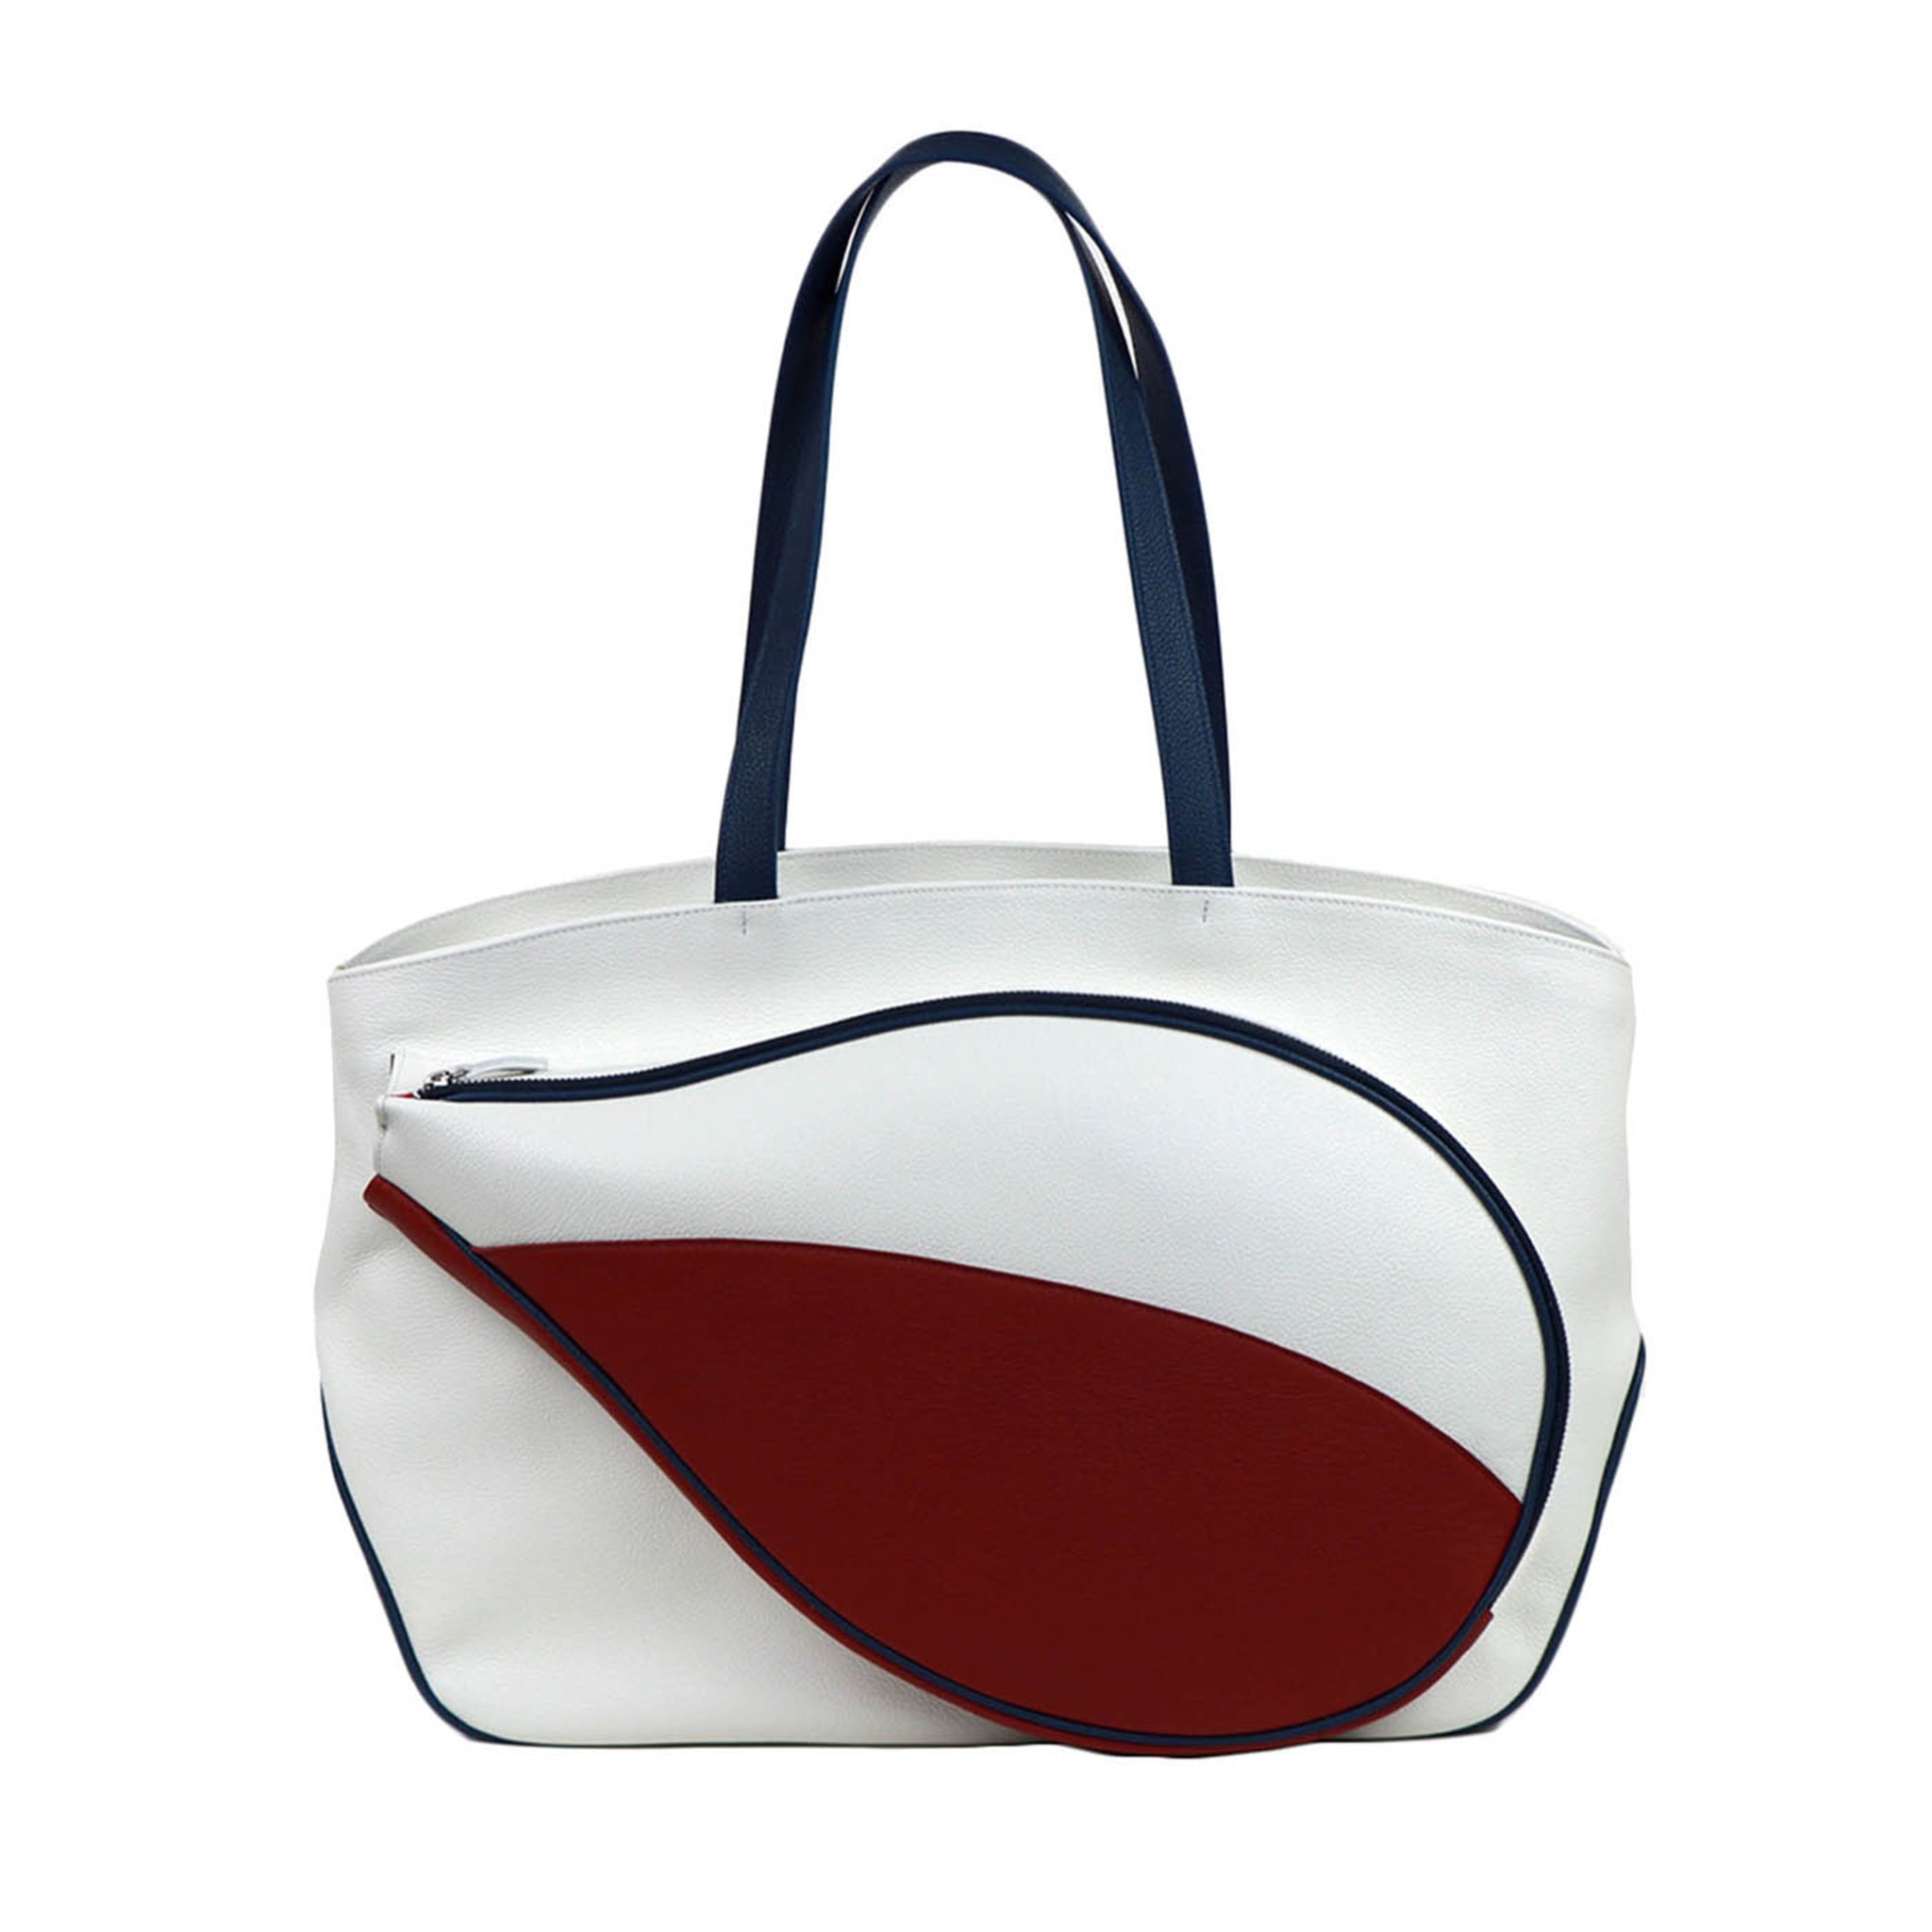 Bolsa de deporte blanca/roja/azul con bolsillo en forma de raqueta de tenis - Vista principal